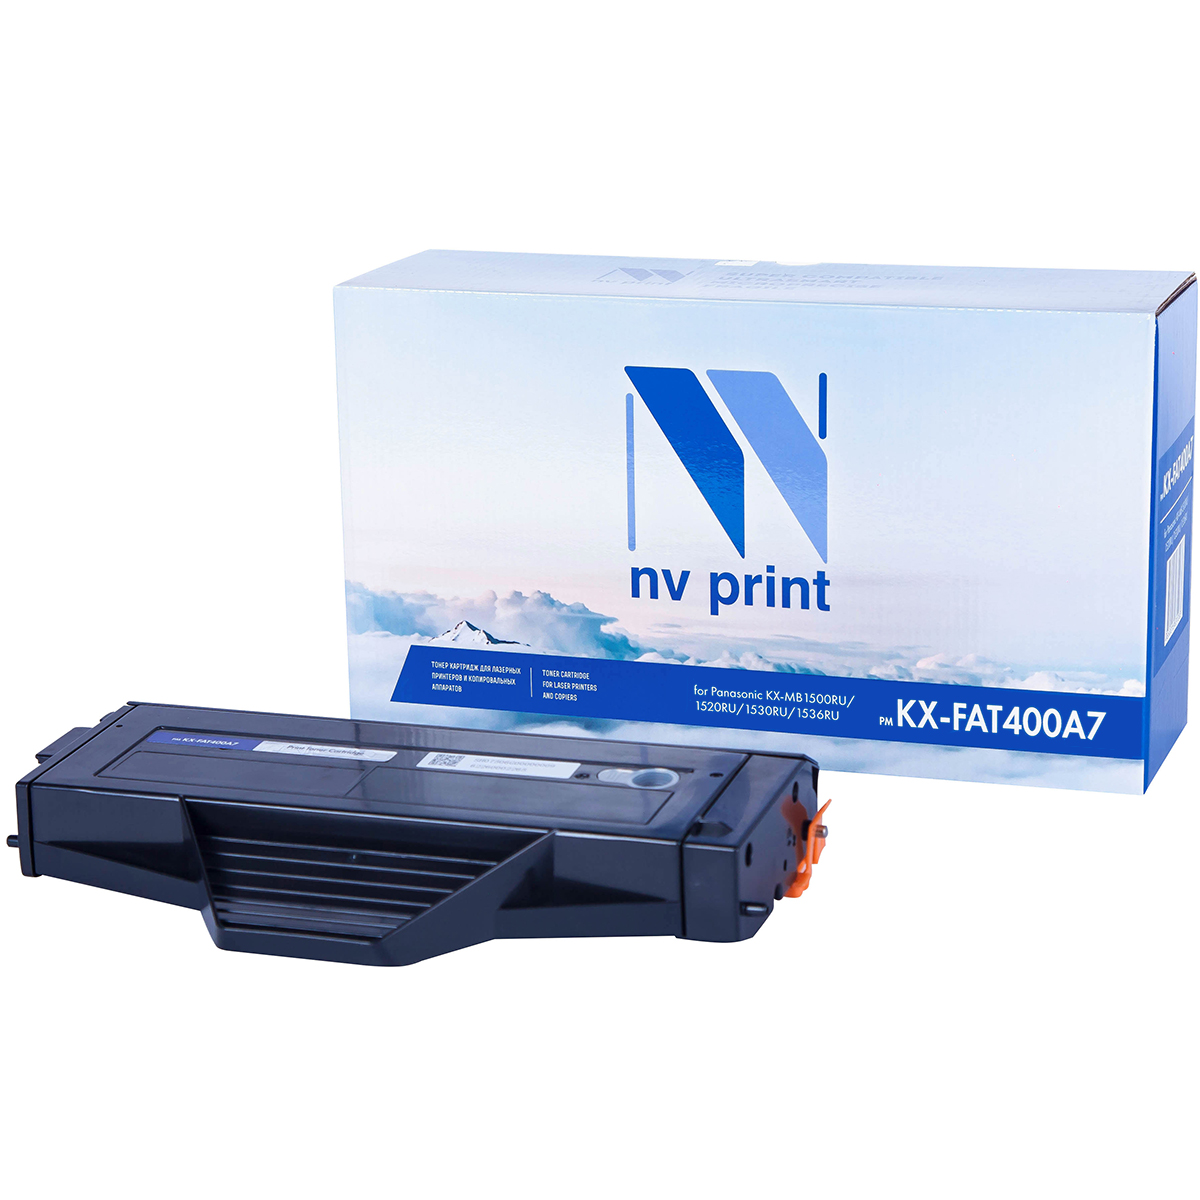 Картридж лазерный NV Print KX-FAT400A7 картридж nv print kx fat400a7 для panasonic kx mb1500ru 1520ru 1530ru 1536ru черный 1800стр